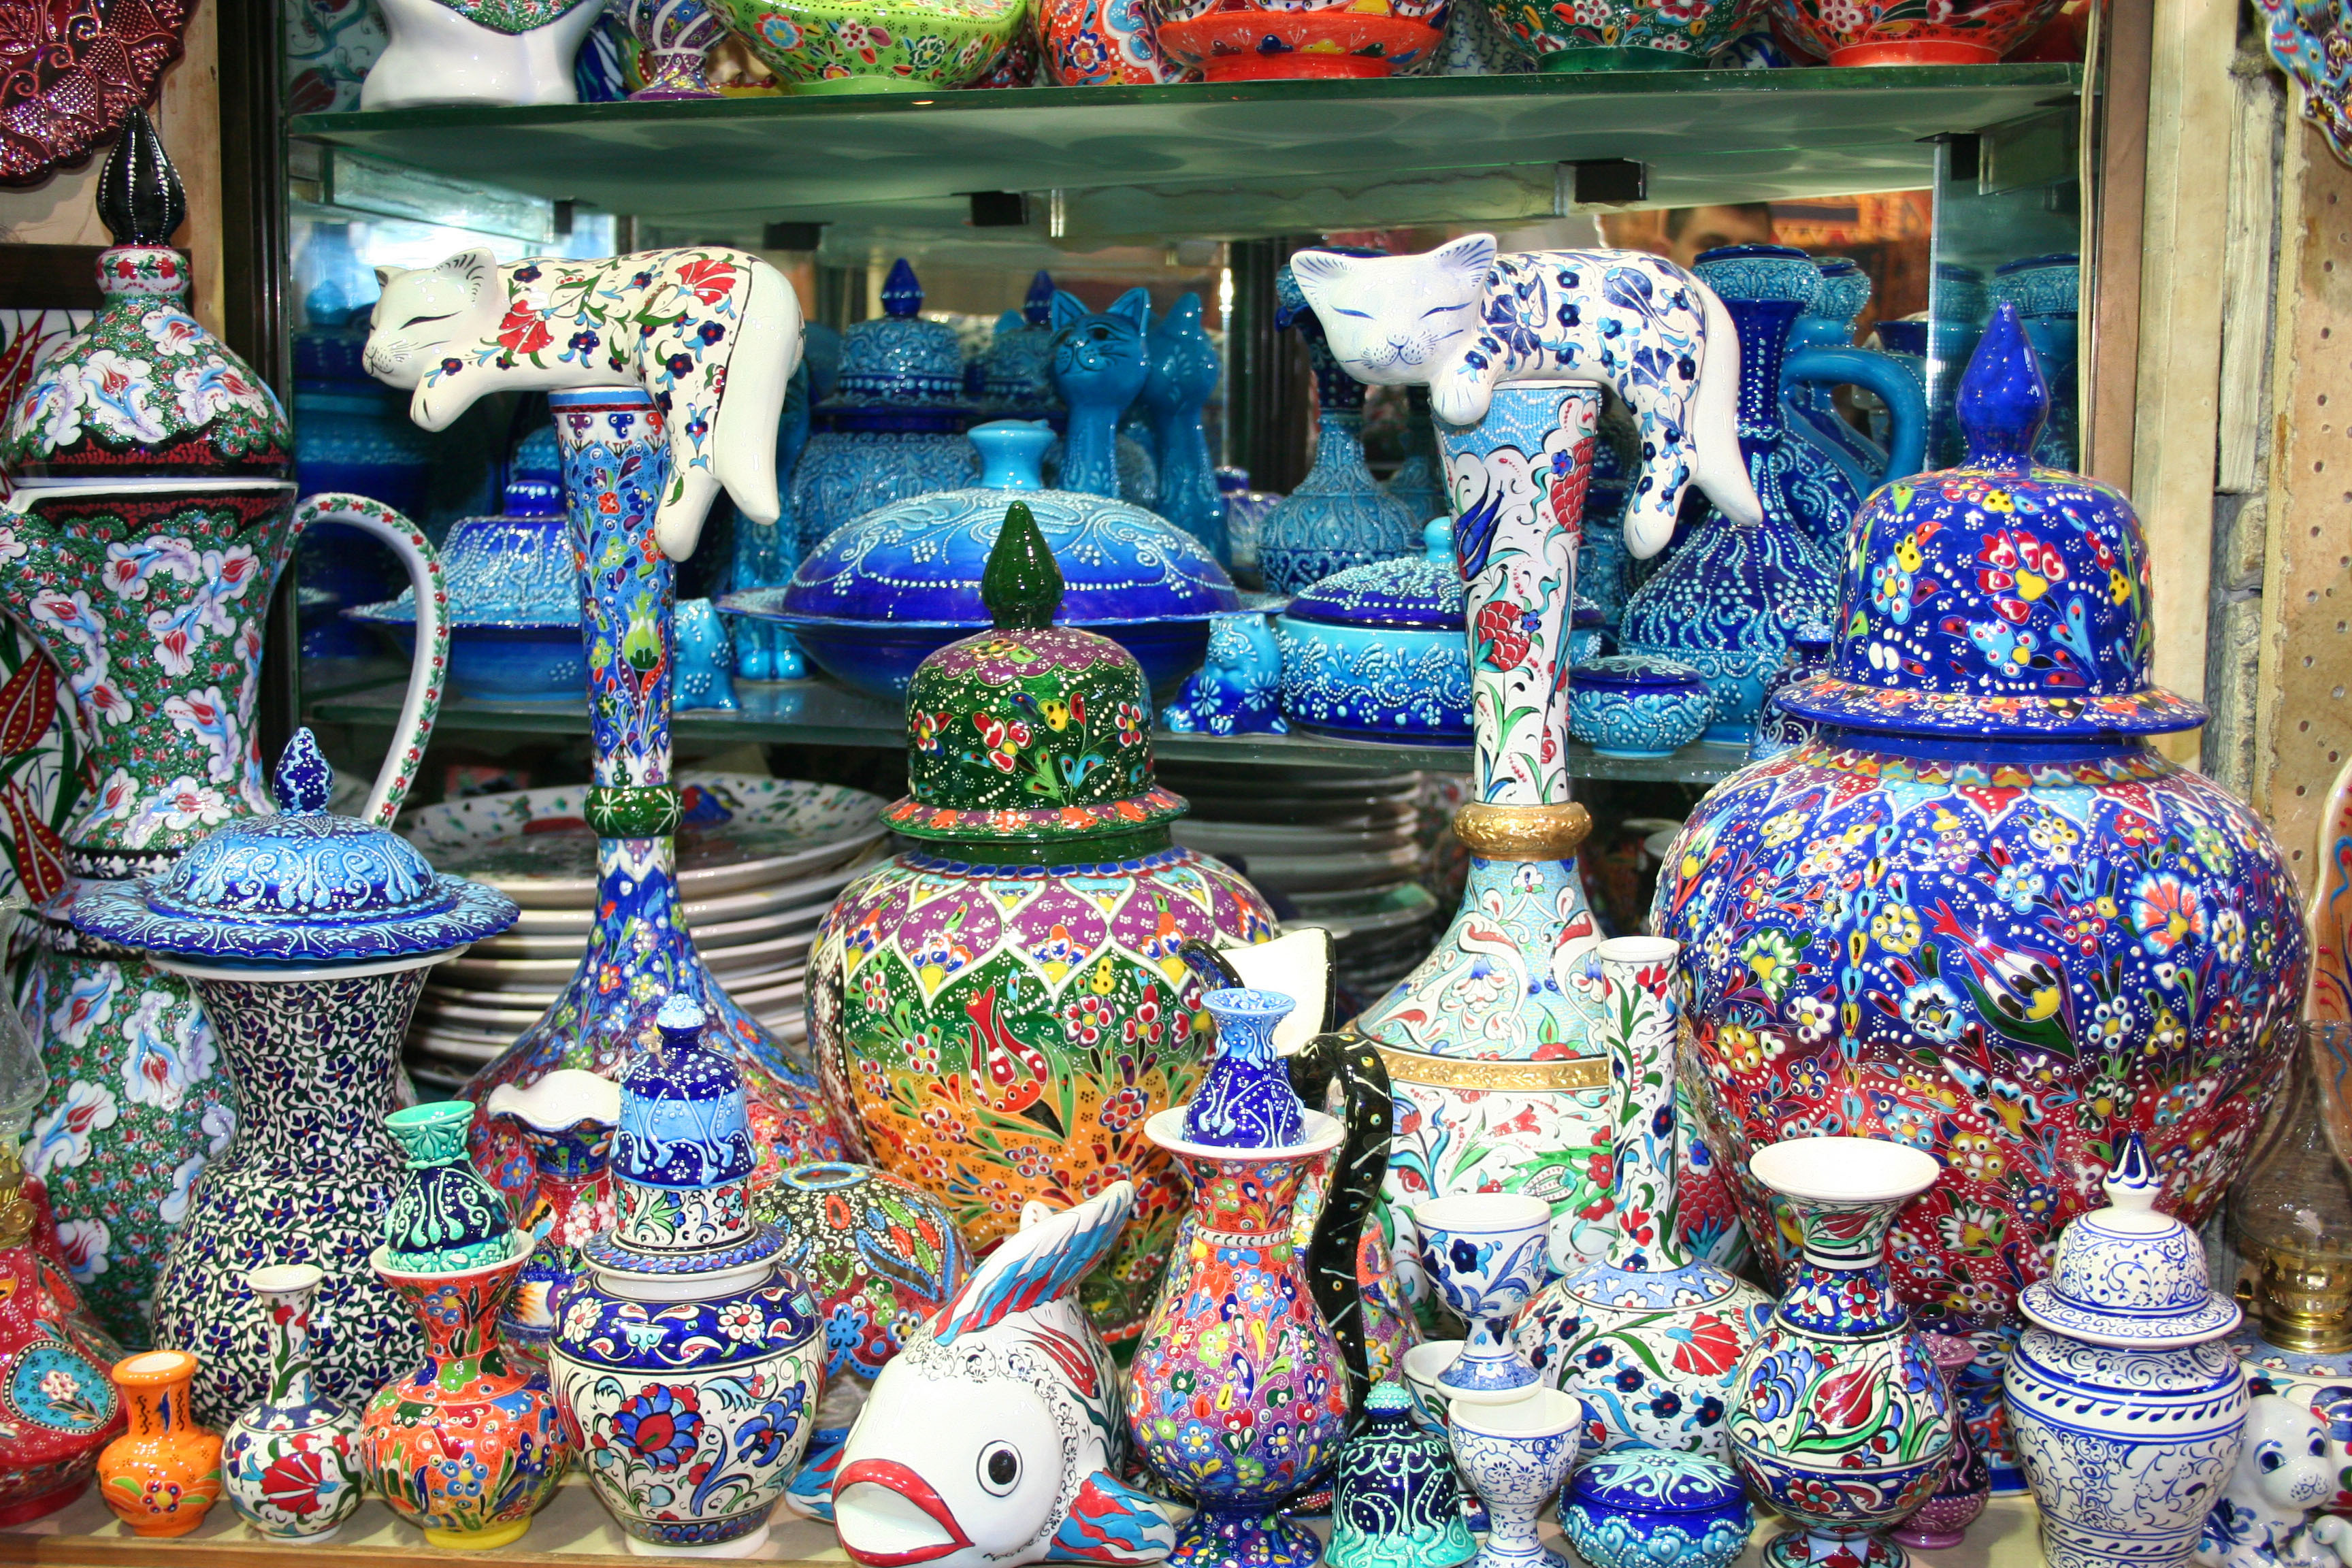 souvenirs at grand bazaar, istanbul; eladora/shutterstock